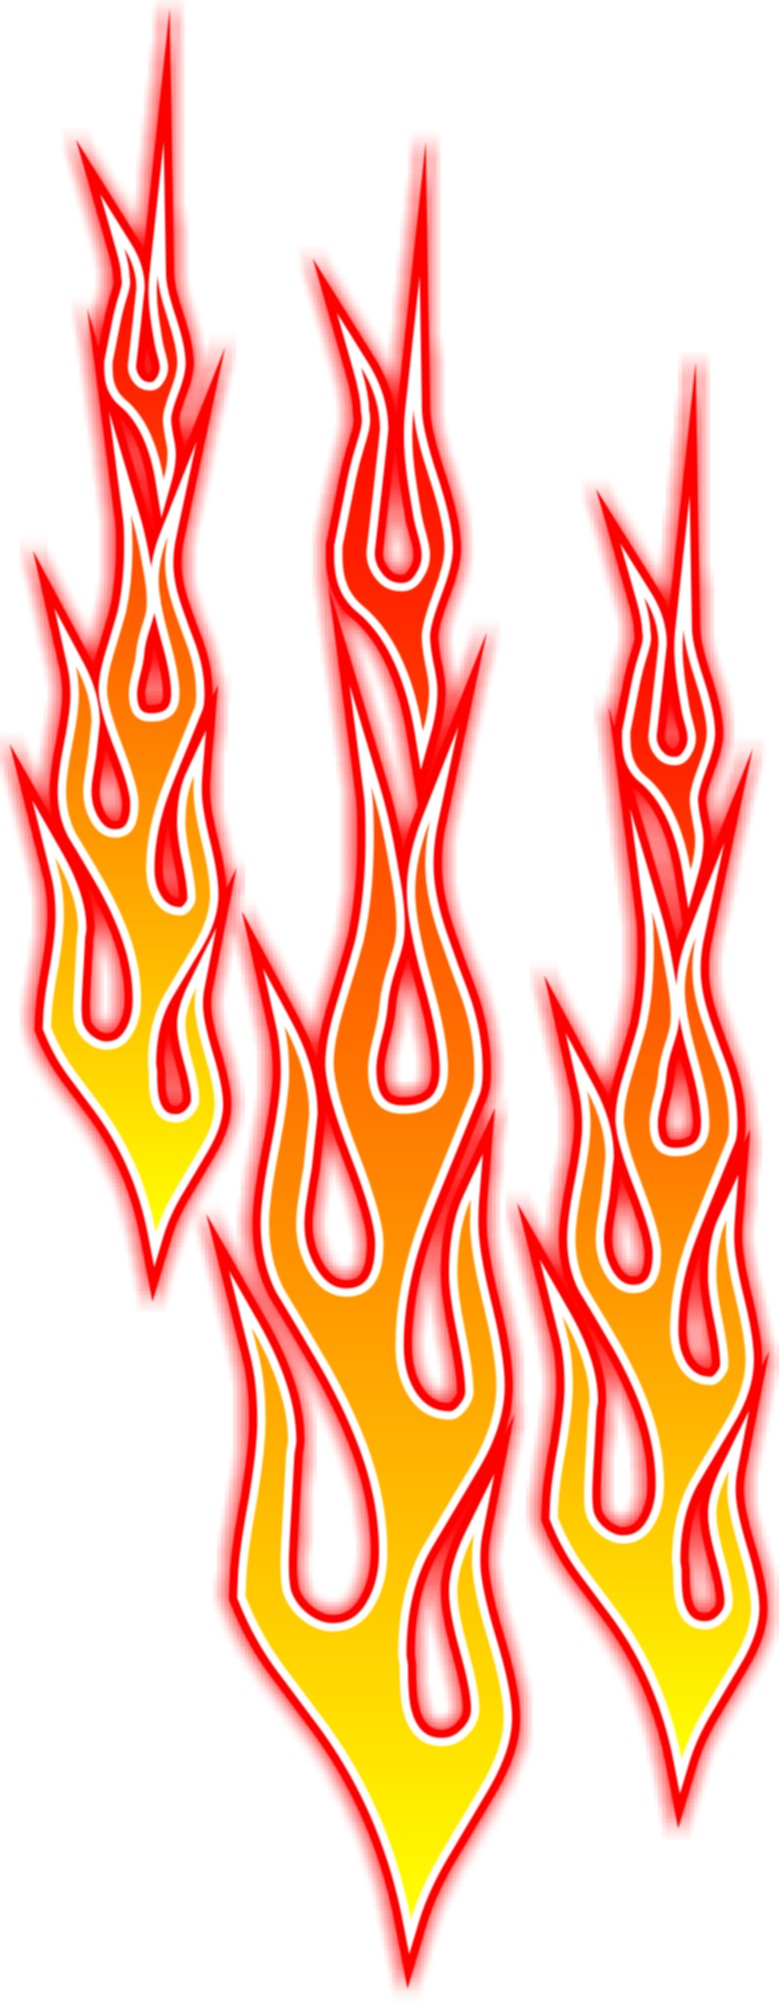 17 Free Vector Fire Flames Clip Art Images